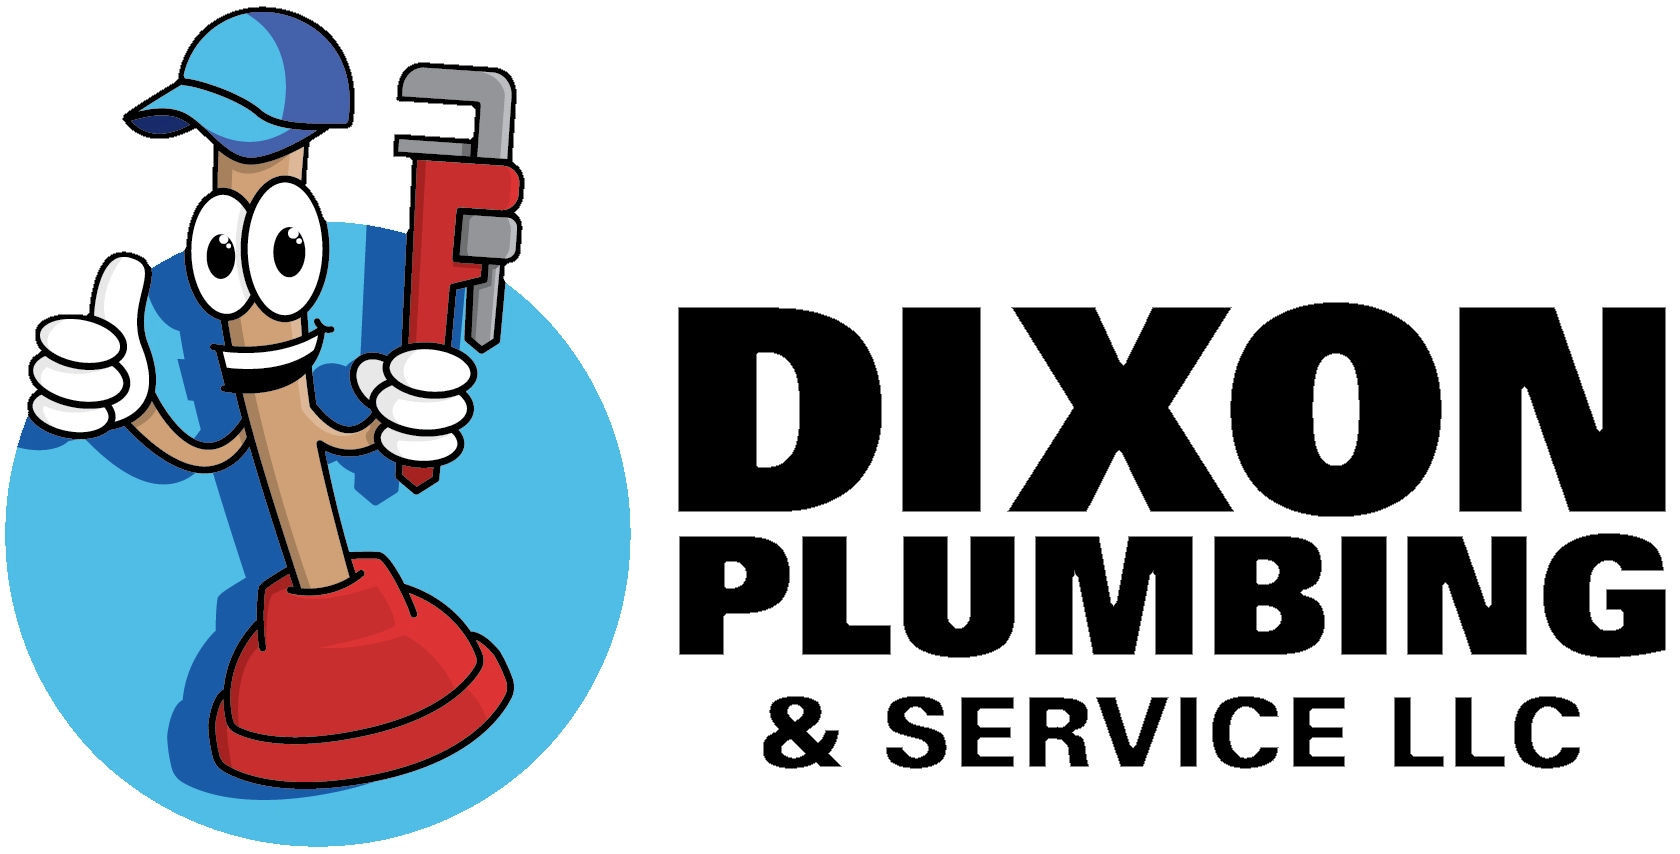 Dixon Plumbing And Service Logo